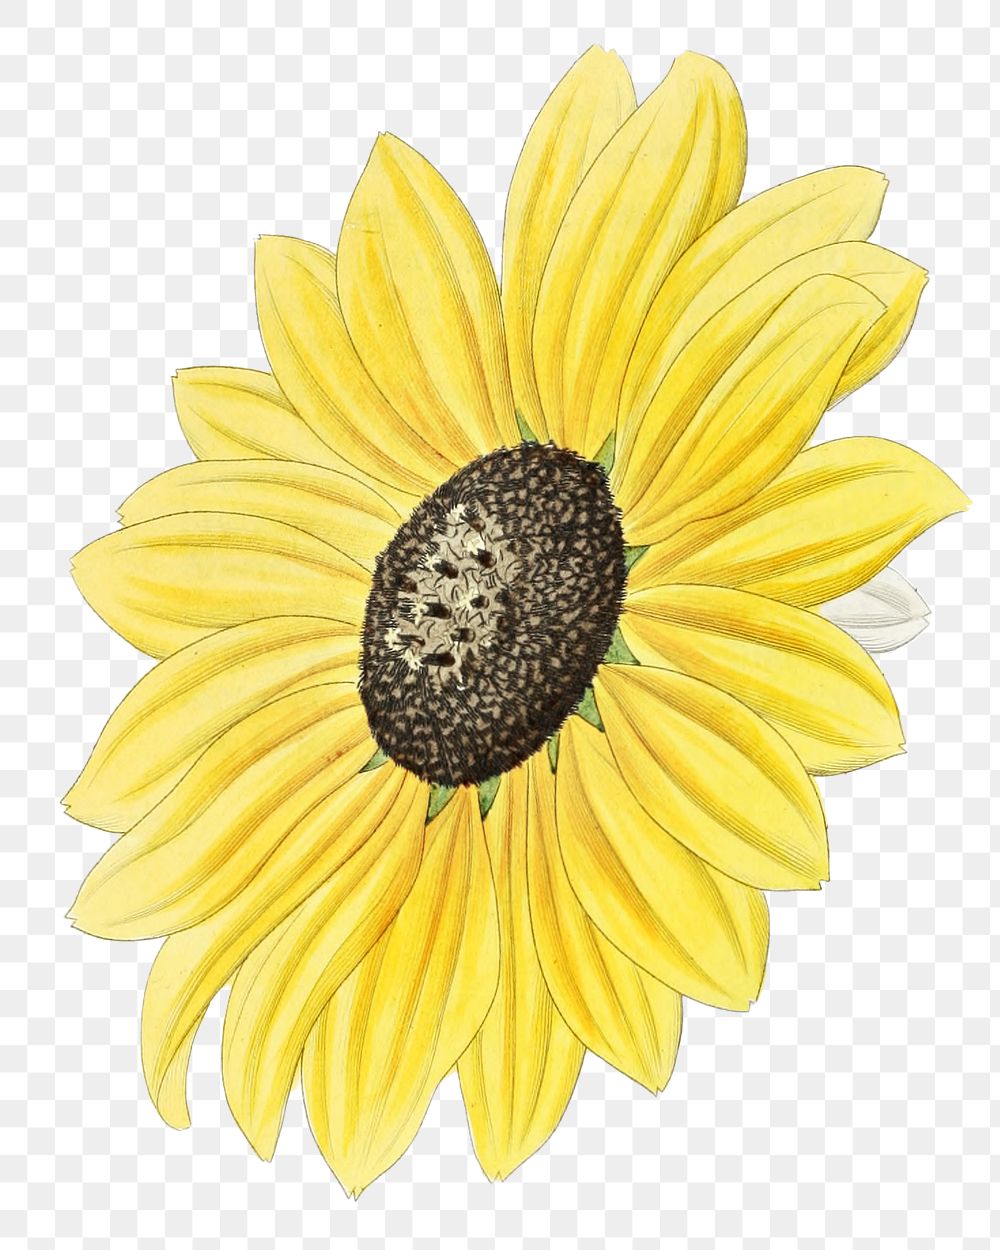 Sunflower flower png cut out botanical illustration